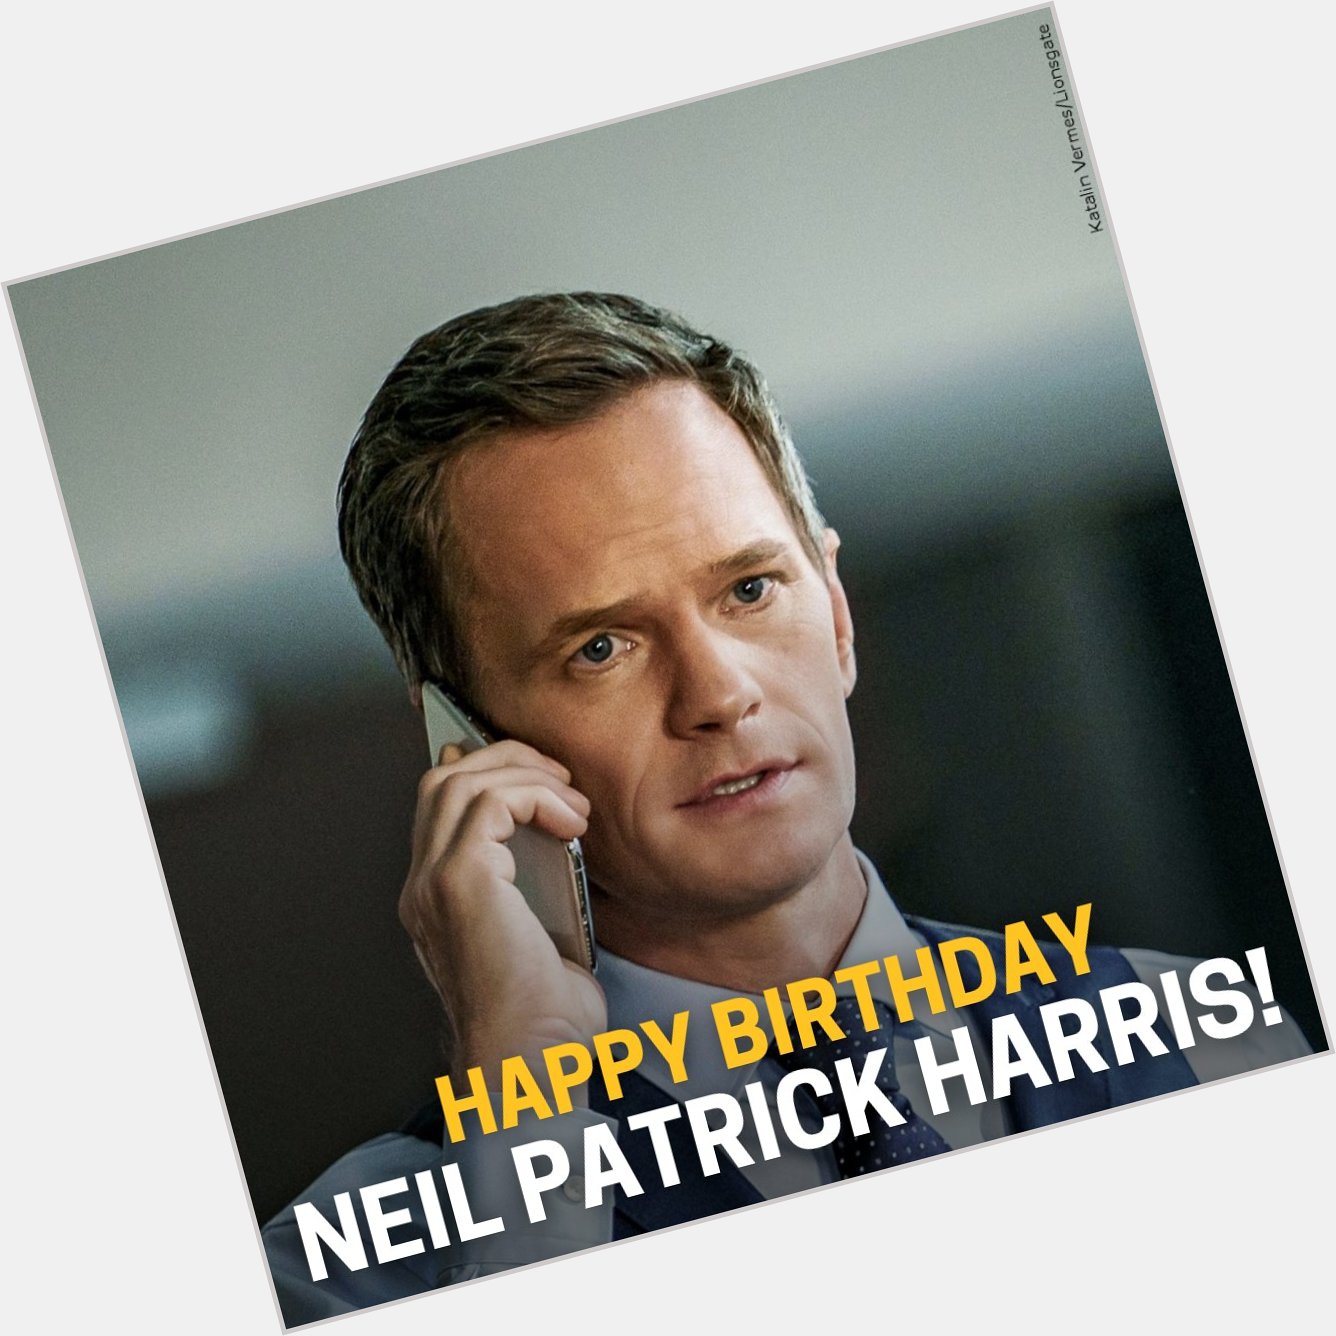 Happy 50th birthday to our Swarley, Neil Patrick Harris!  